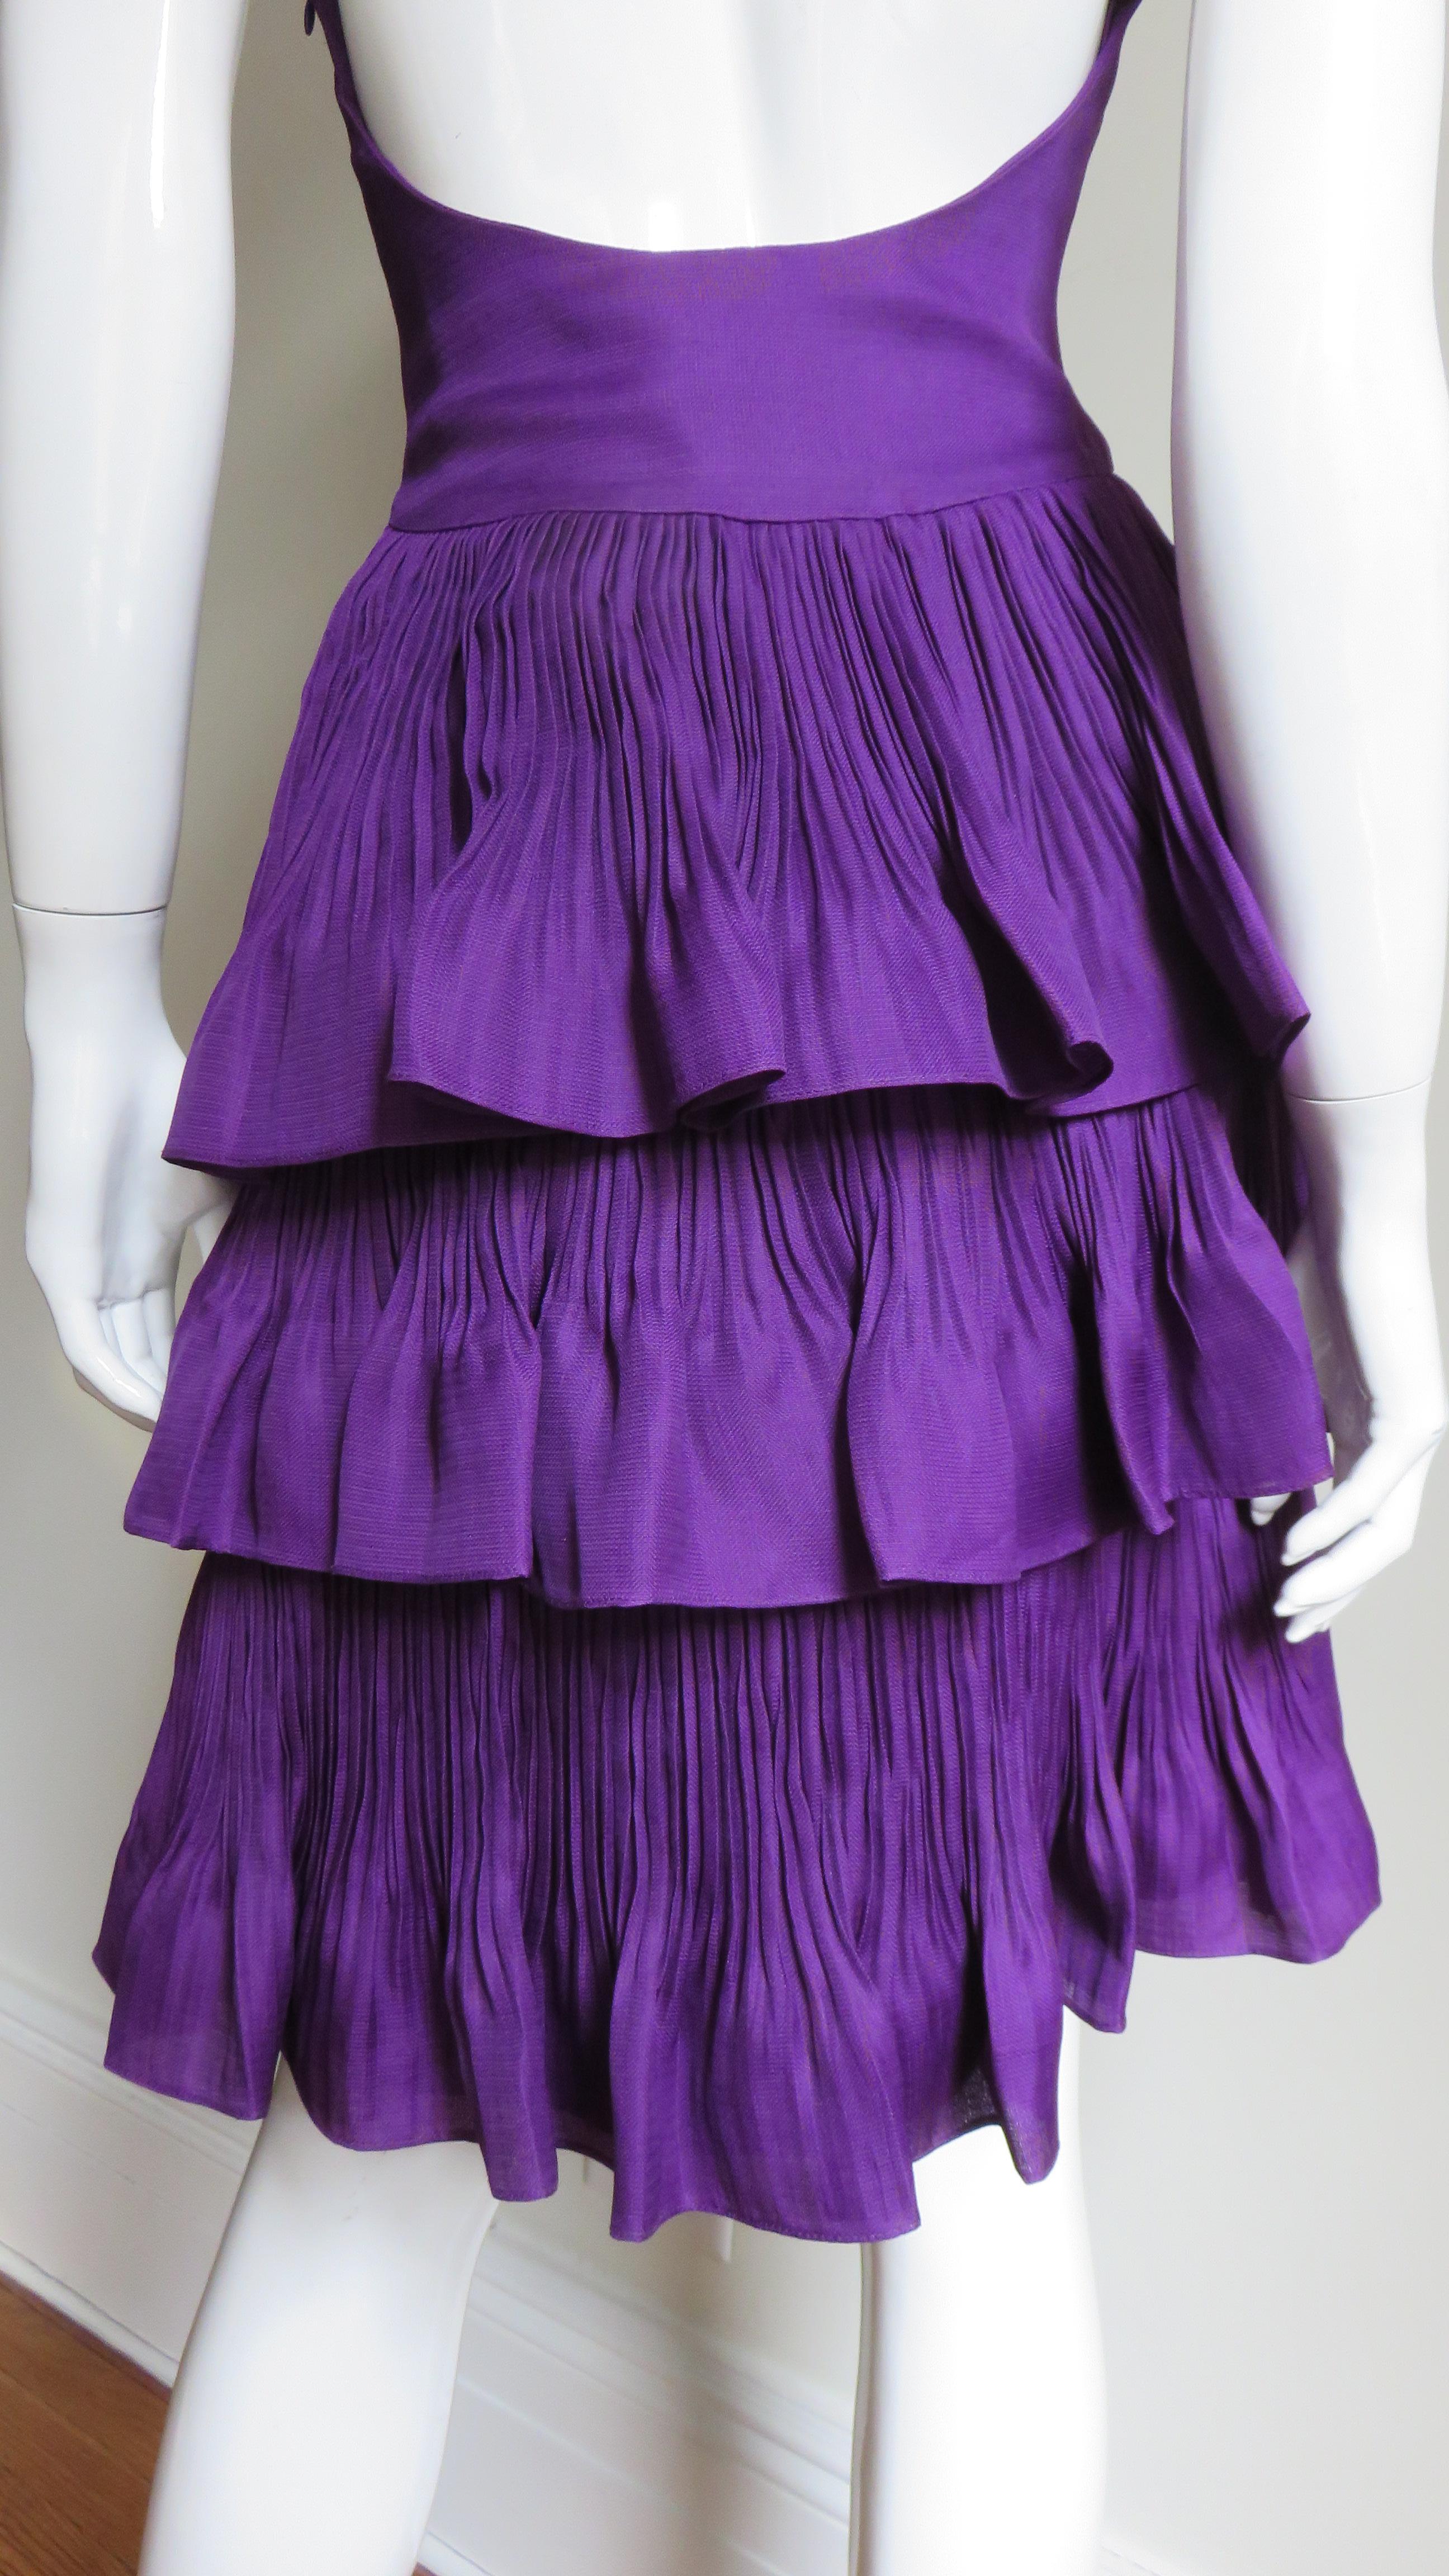 John Galliano for Christian Dior S/S 2009 Silk Halter Dress For Sale 7